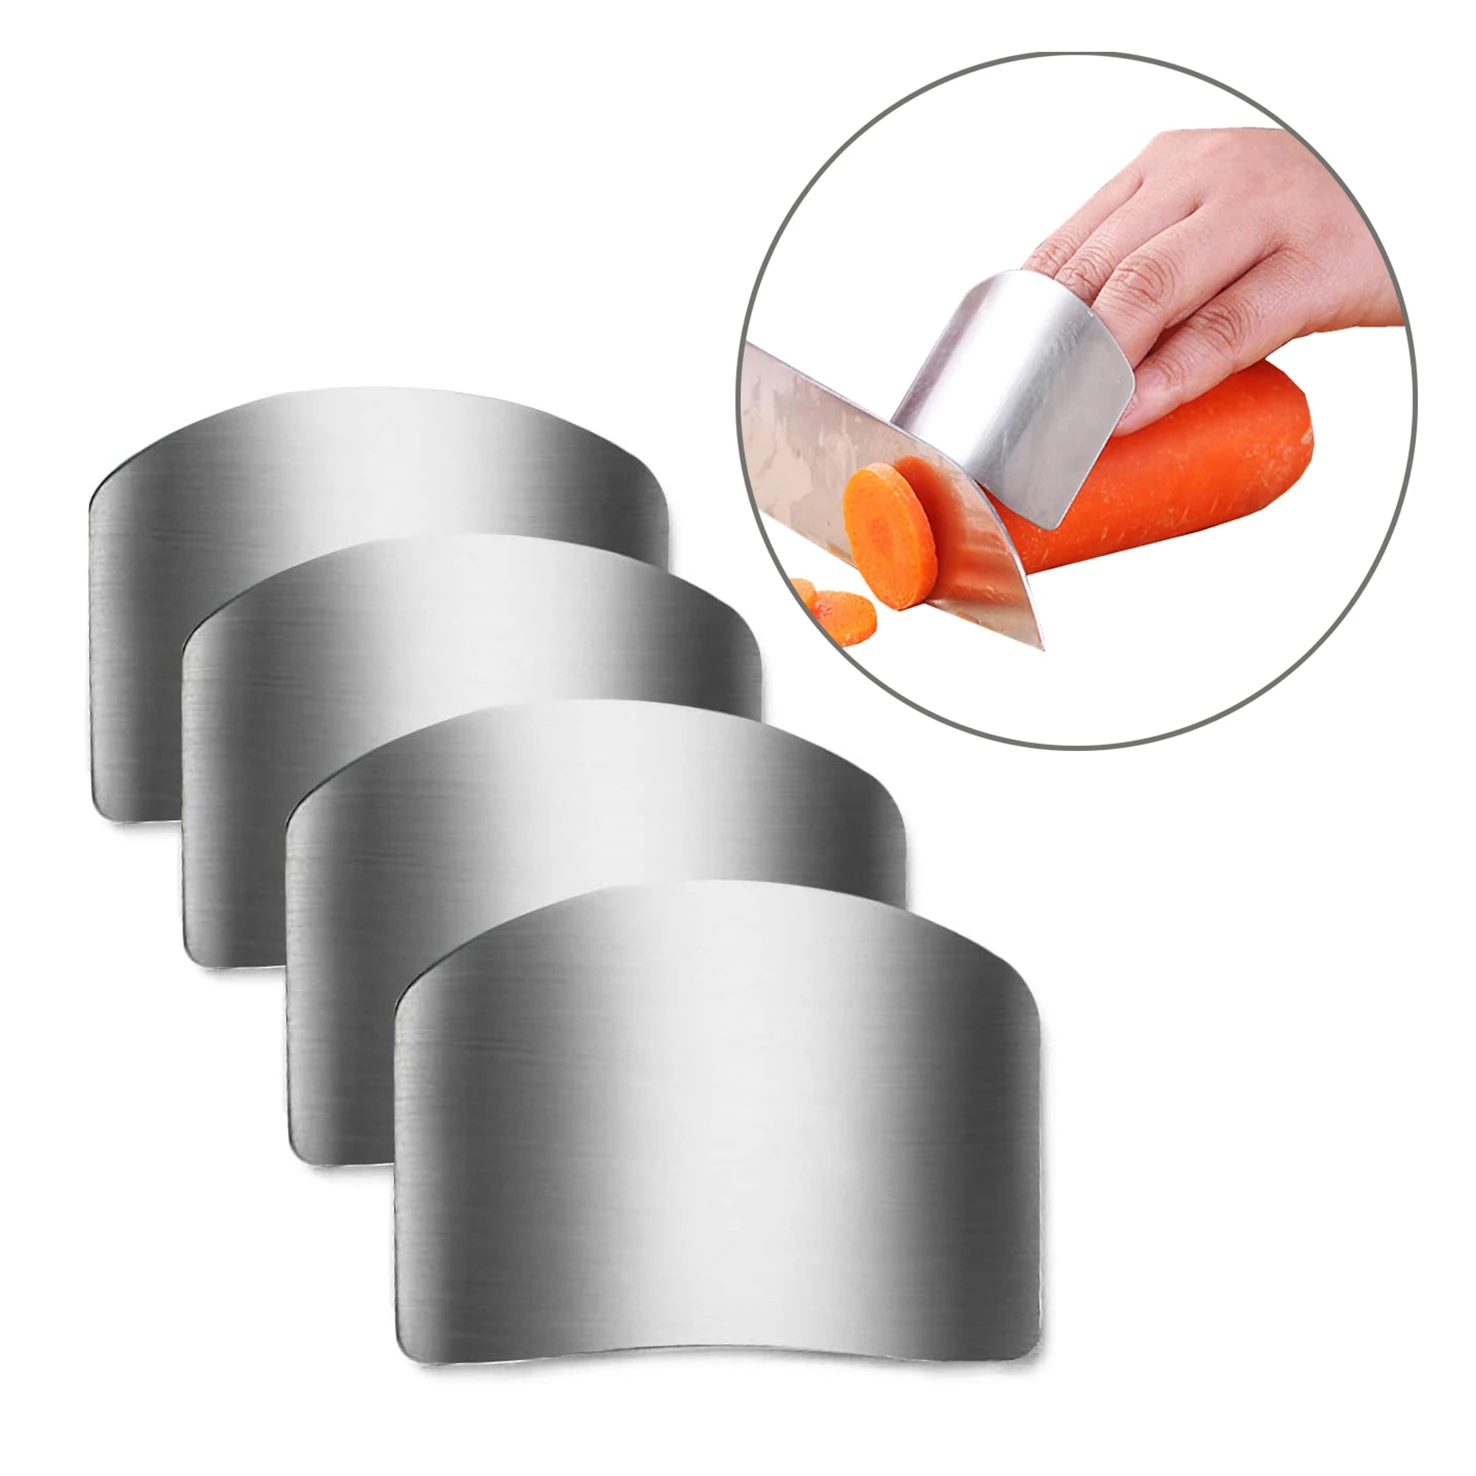 4pcs Stainless Steel For Cutting Vegetables Finger Guard Safe Slice